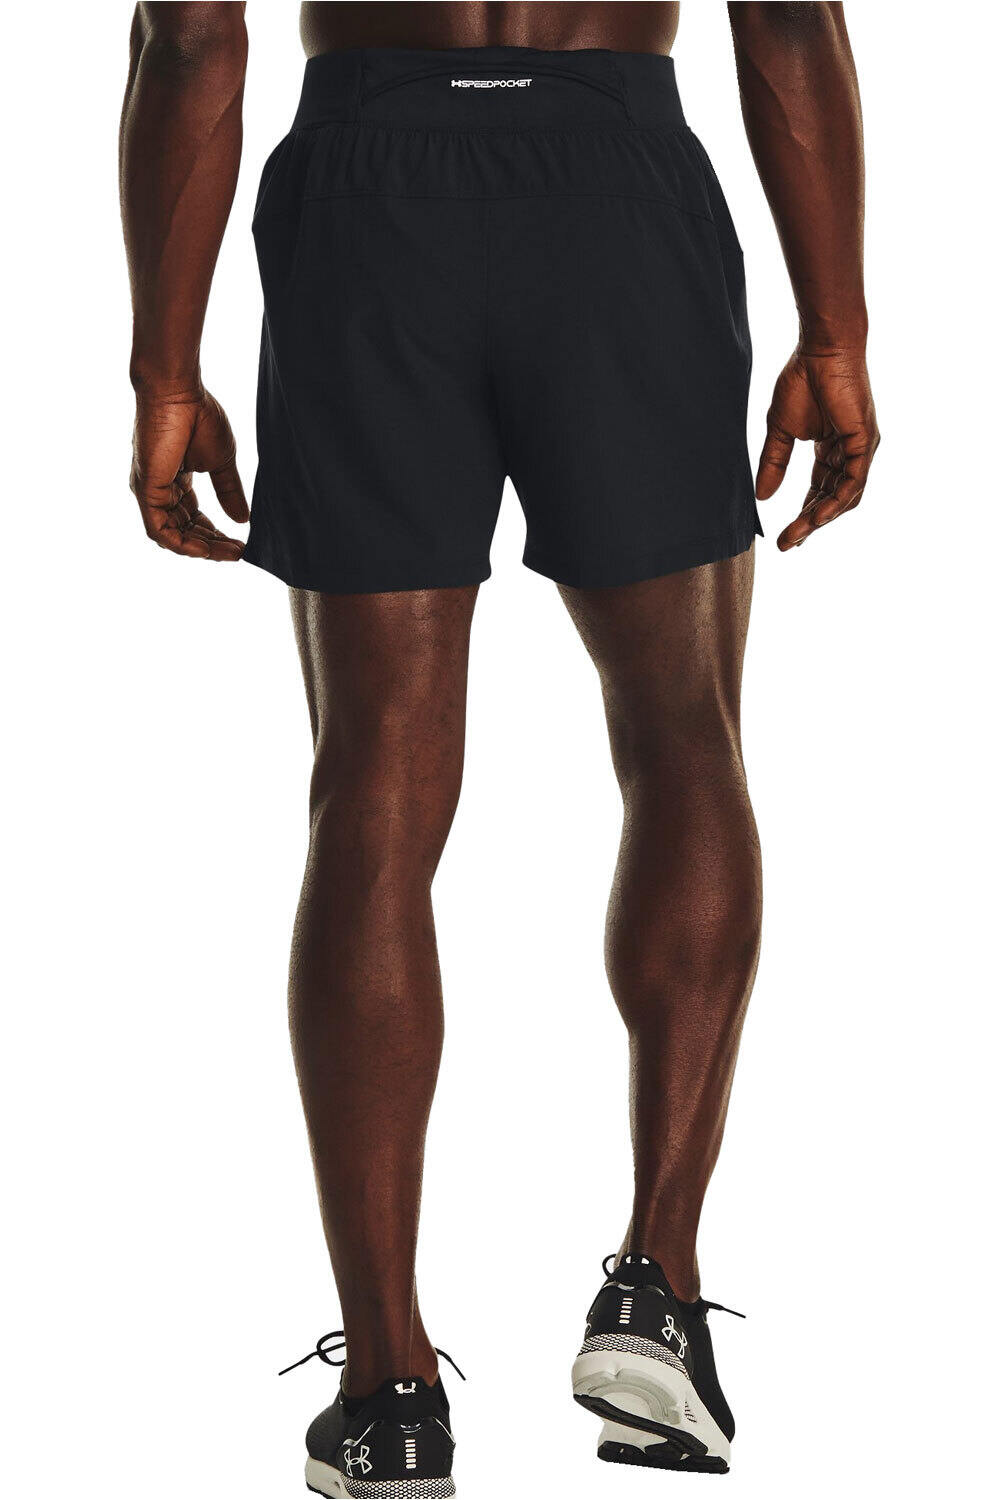 Under Armour Launch Elite Shorts Men (1376509) black/black/reflective - Ropa running